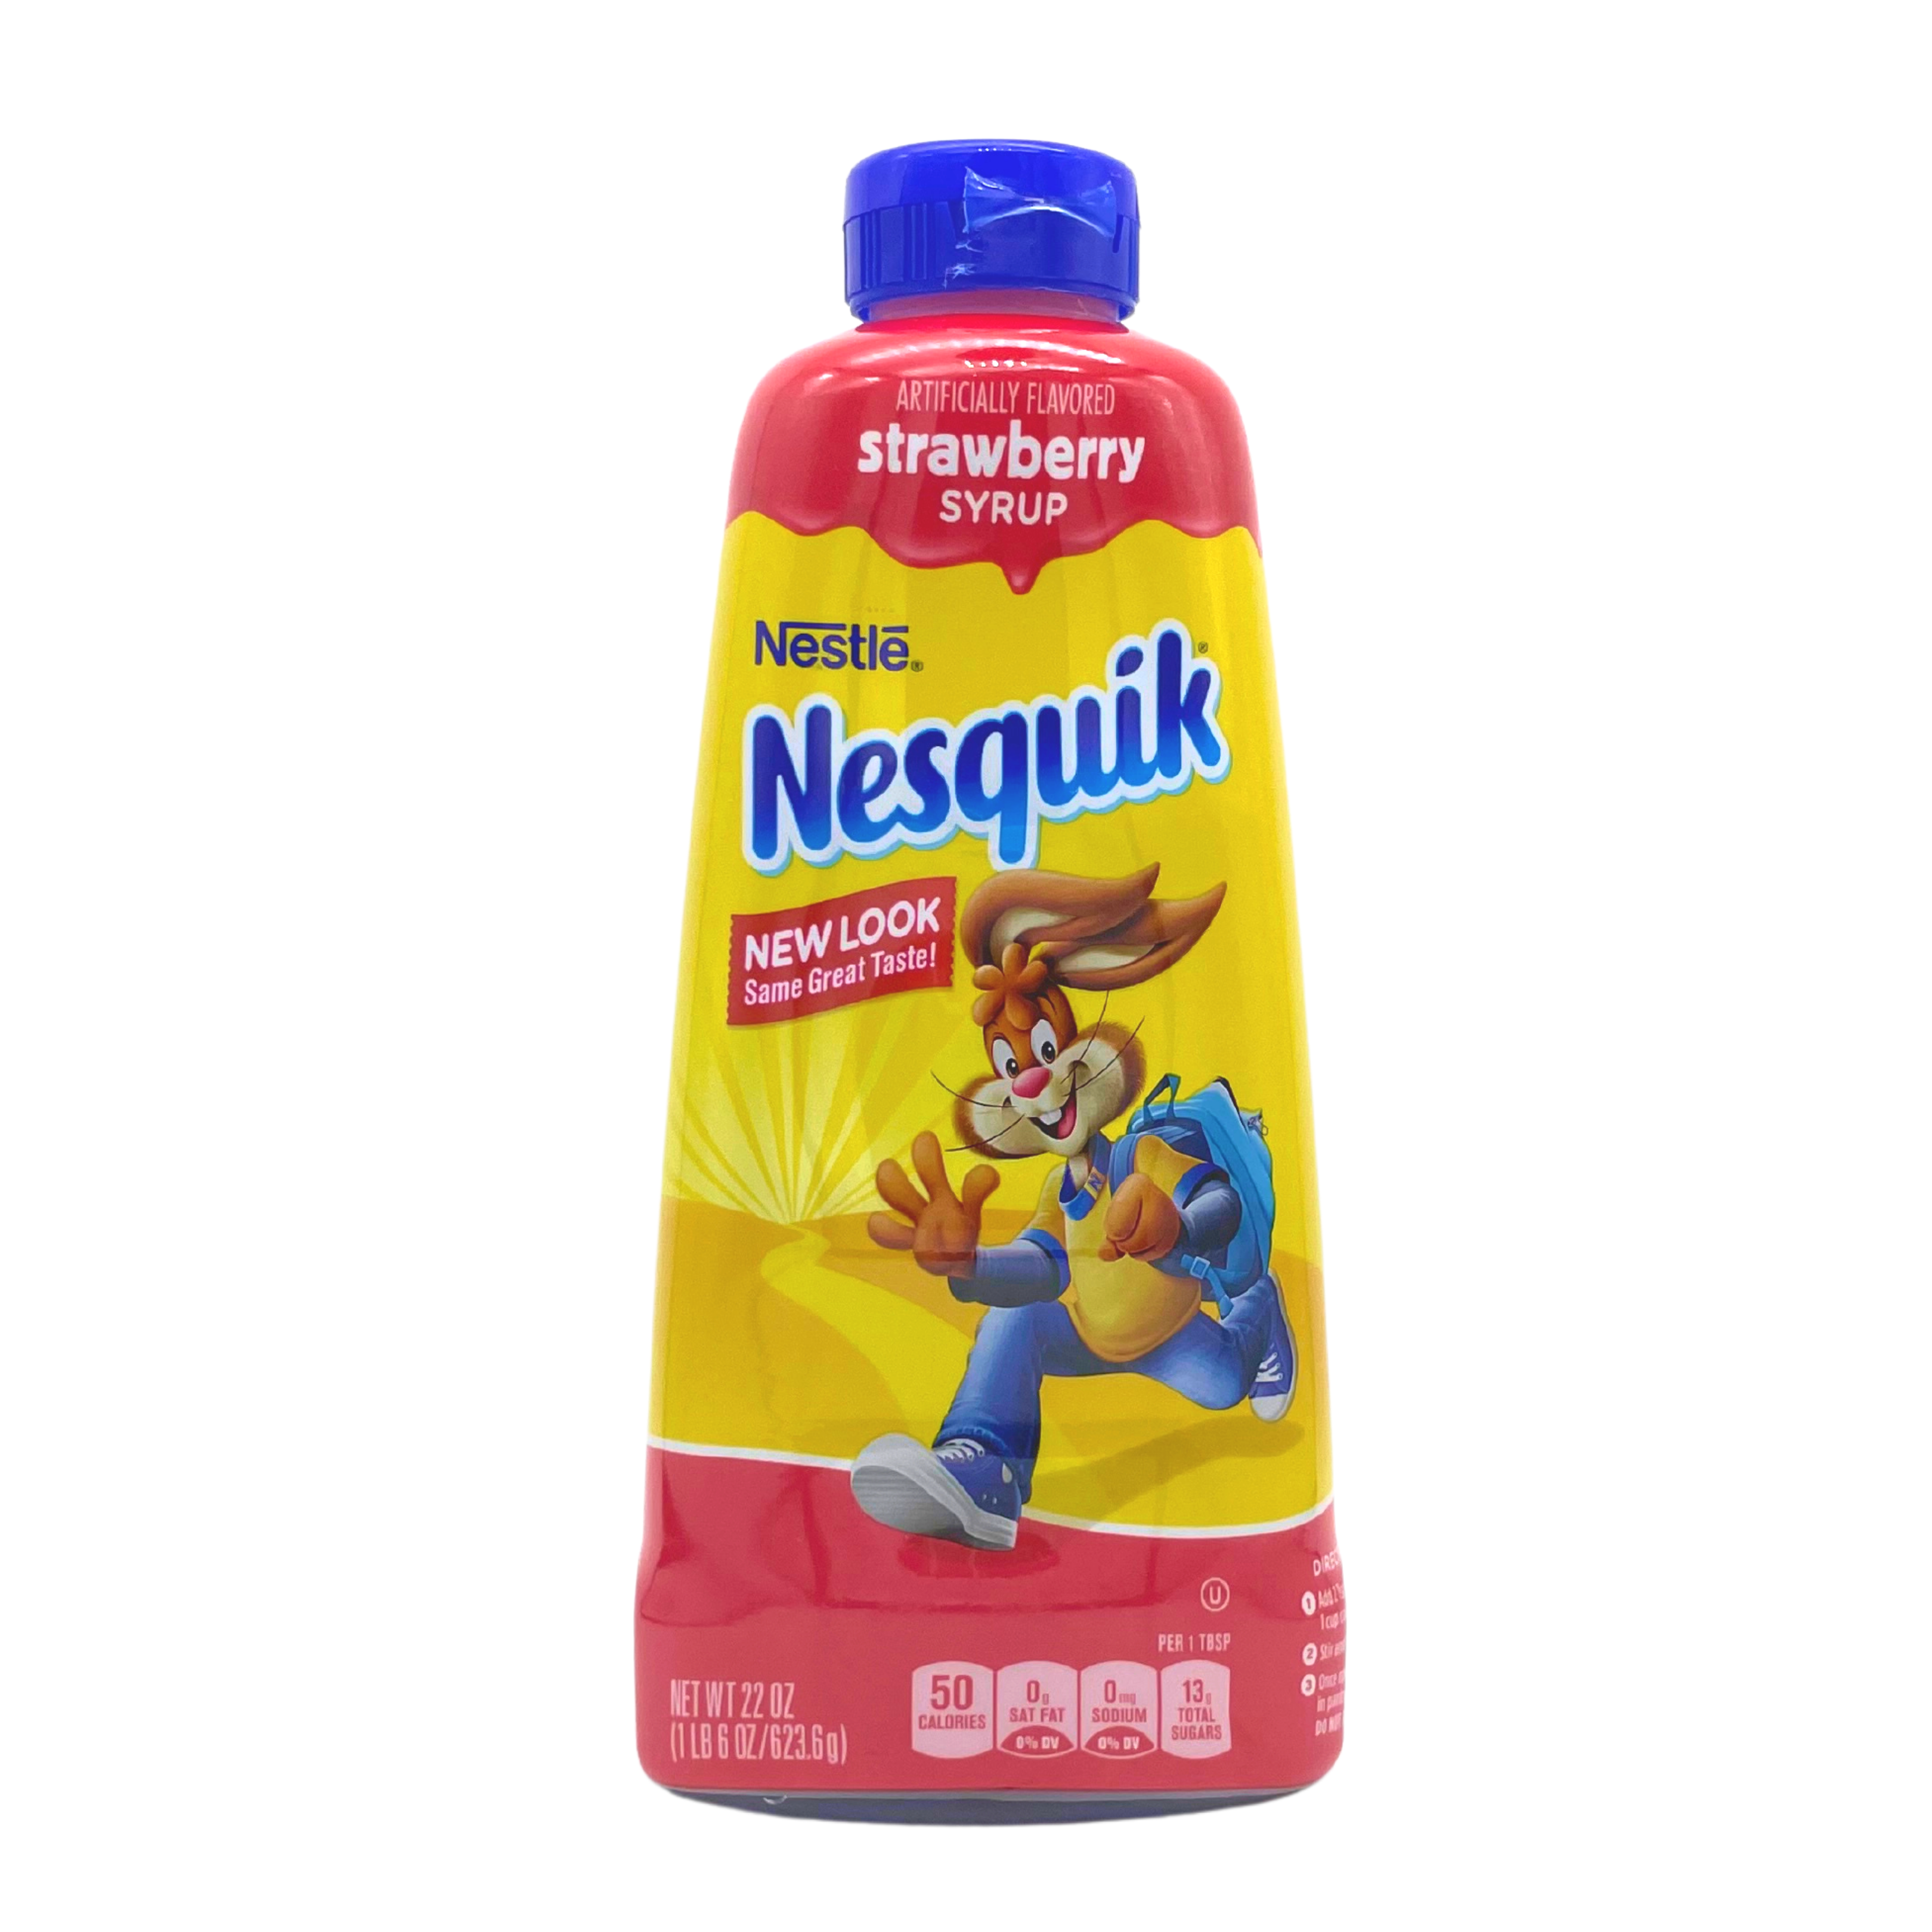 Nesquik - Strawberry Syrup / Sciroppo alla Fragola 623g